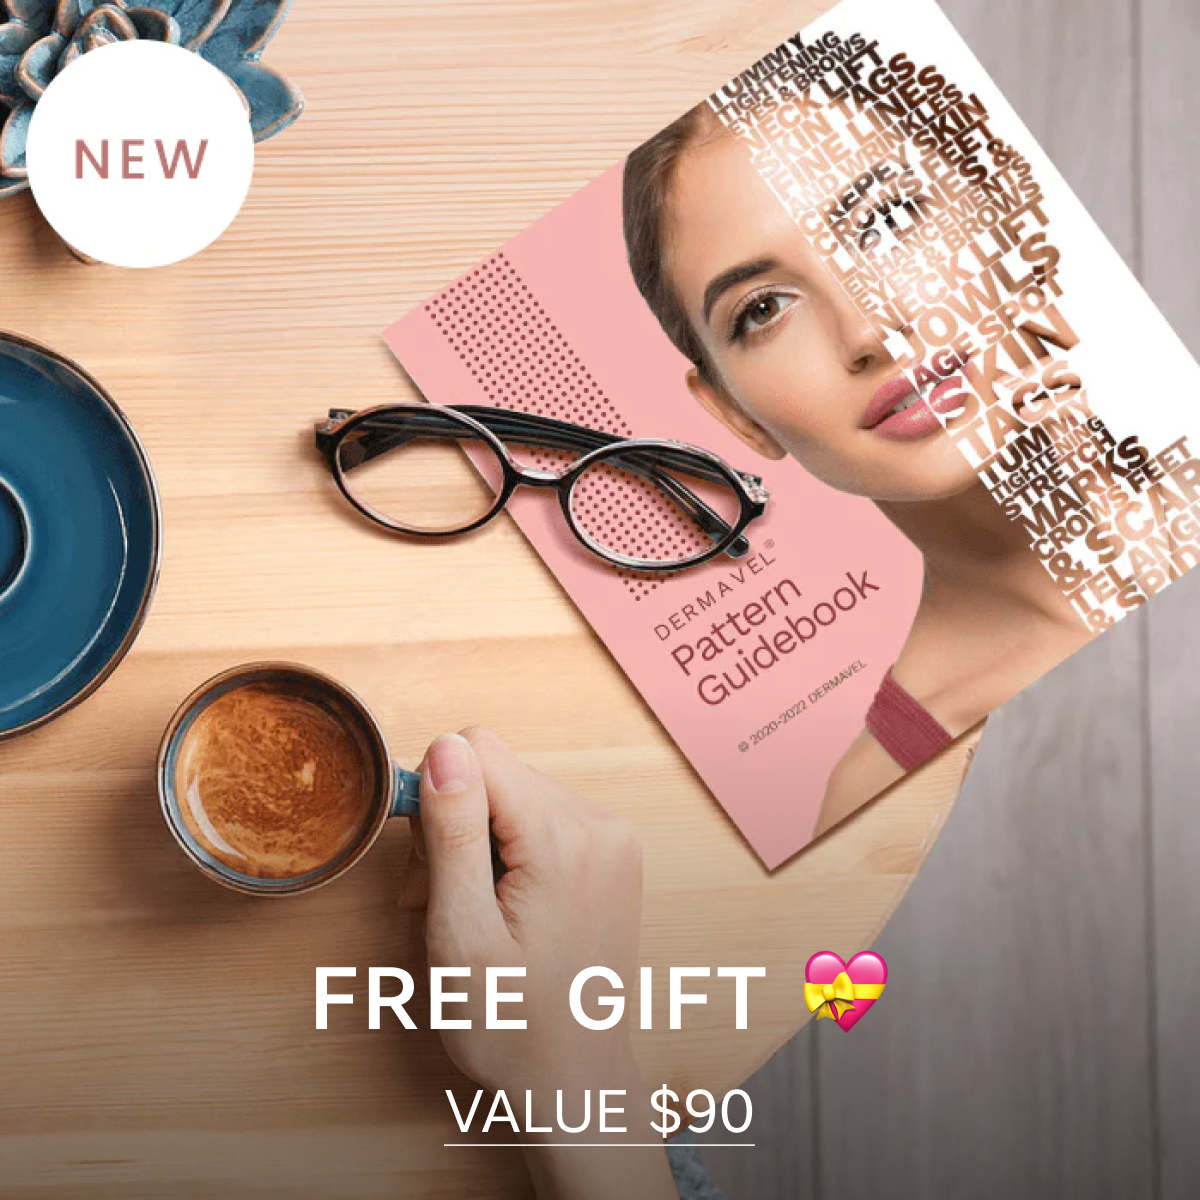 Bundle-Angebot: Ultimate Beauty Spa Kit (25x) + Reparaturpaket (2040 Stück) + kostenloses Ratgeberbuch